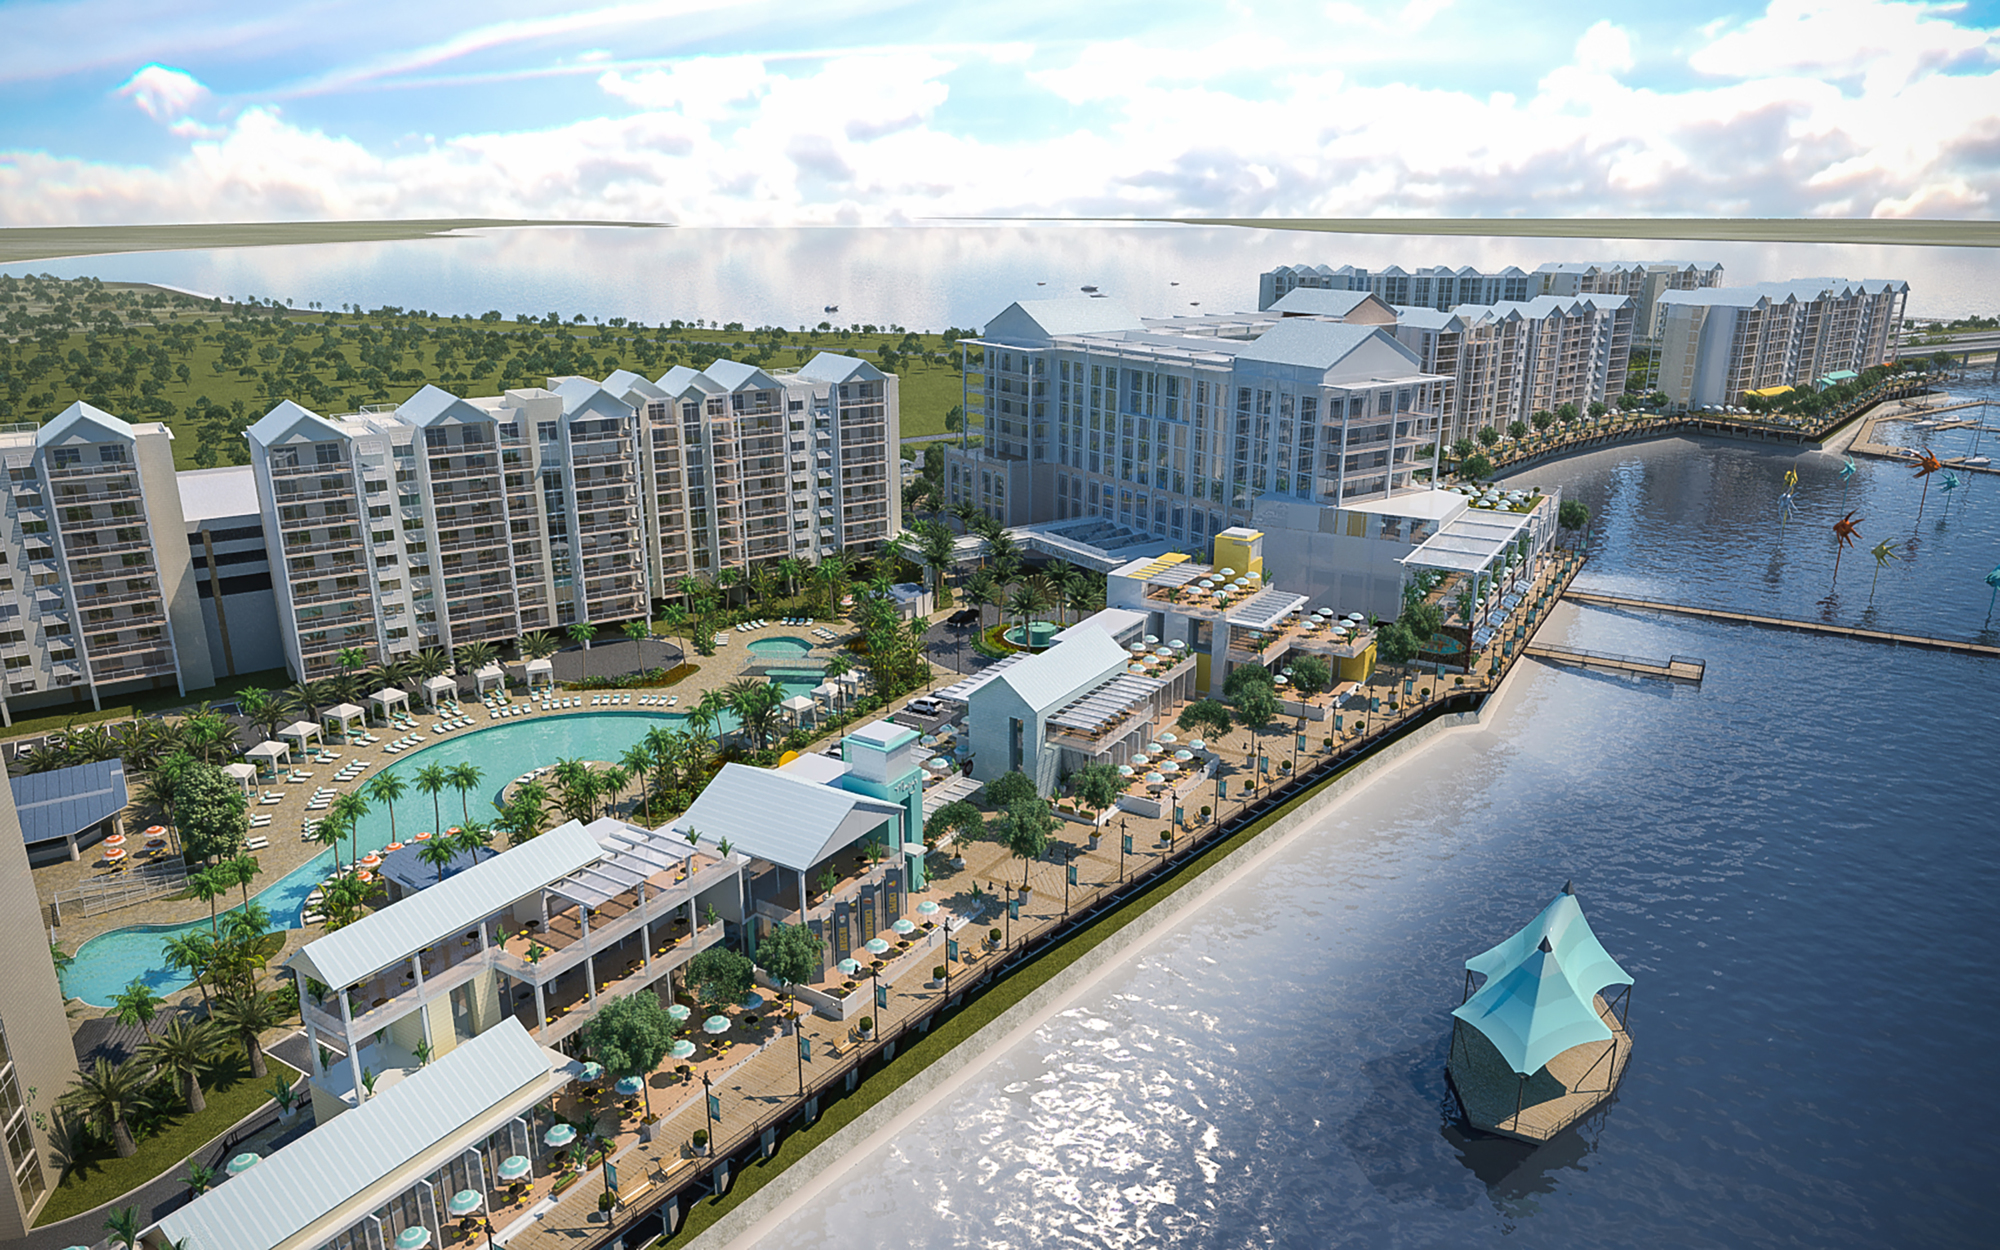 Rendering of the planned Sunseeker Resort at Port Charlotte.